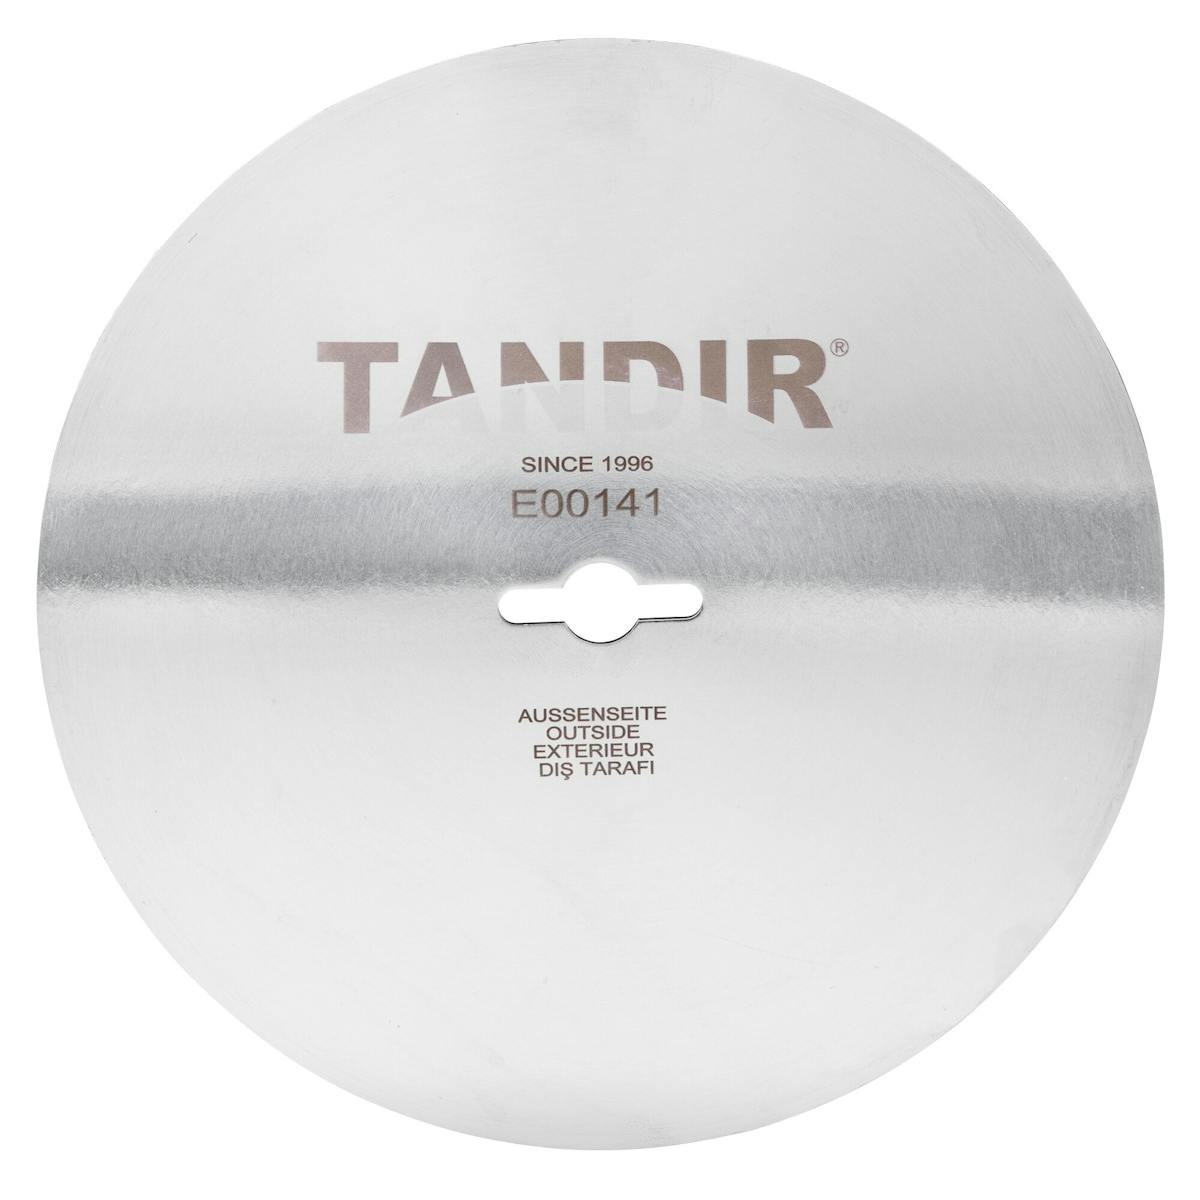 TANDIR® | Řezný nůž - Ø140mm - hladký - pro TANDIR II - 140mm